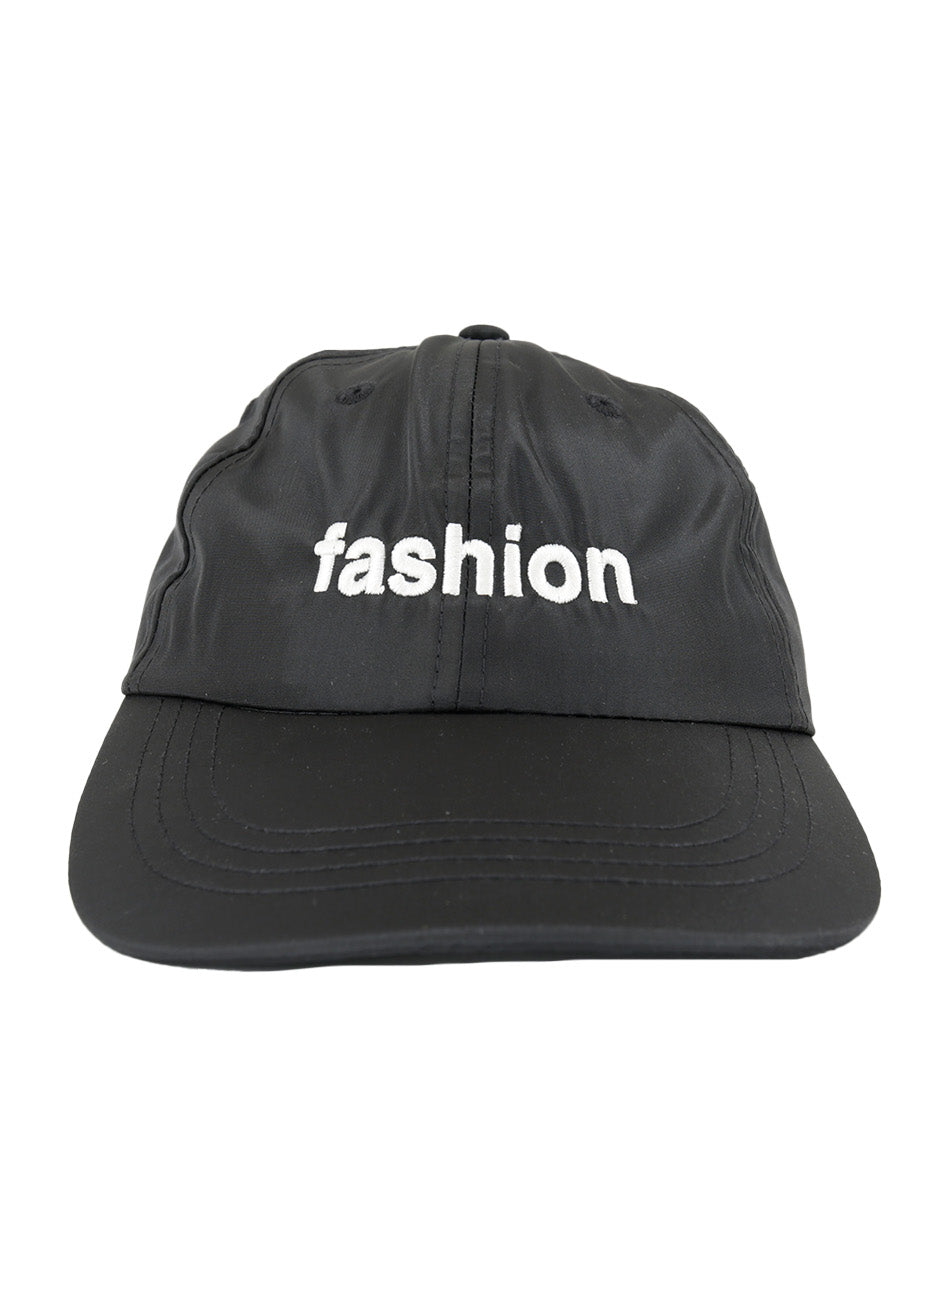 Fashion Adjustable Cap